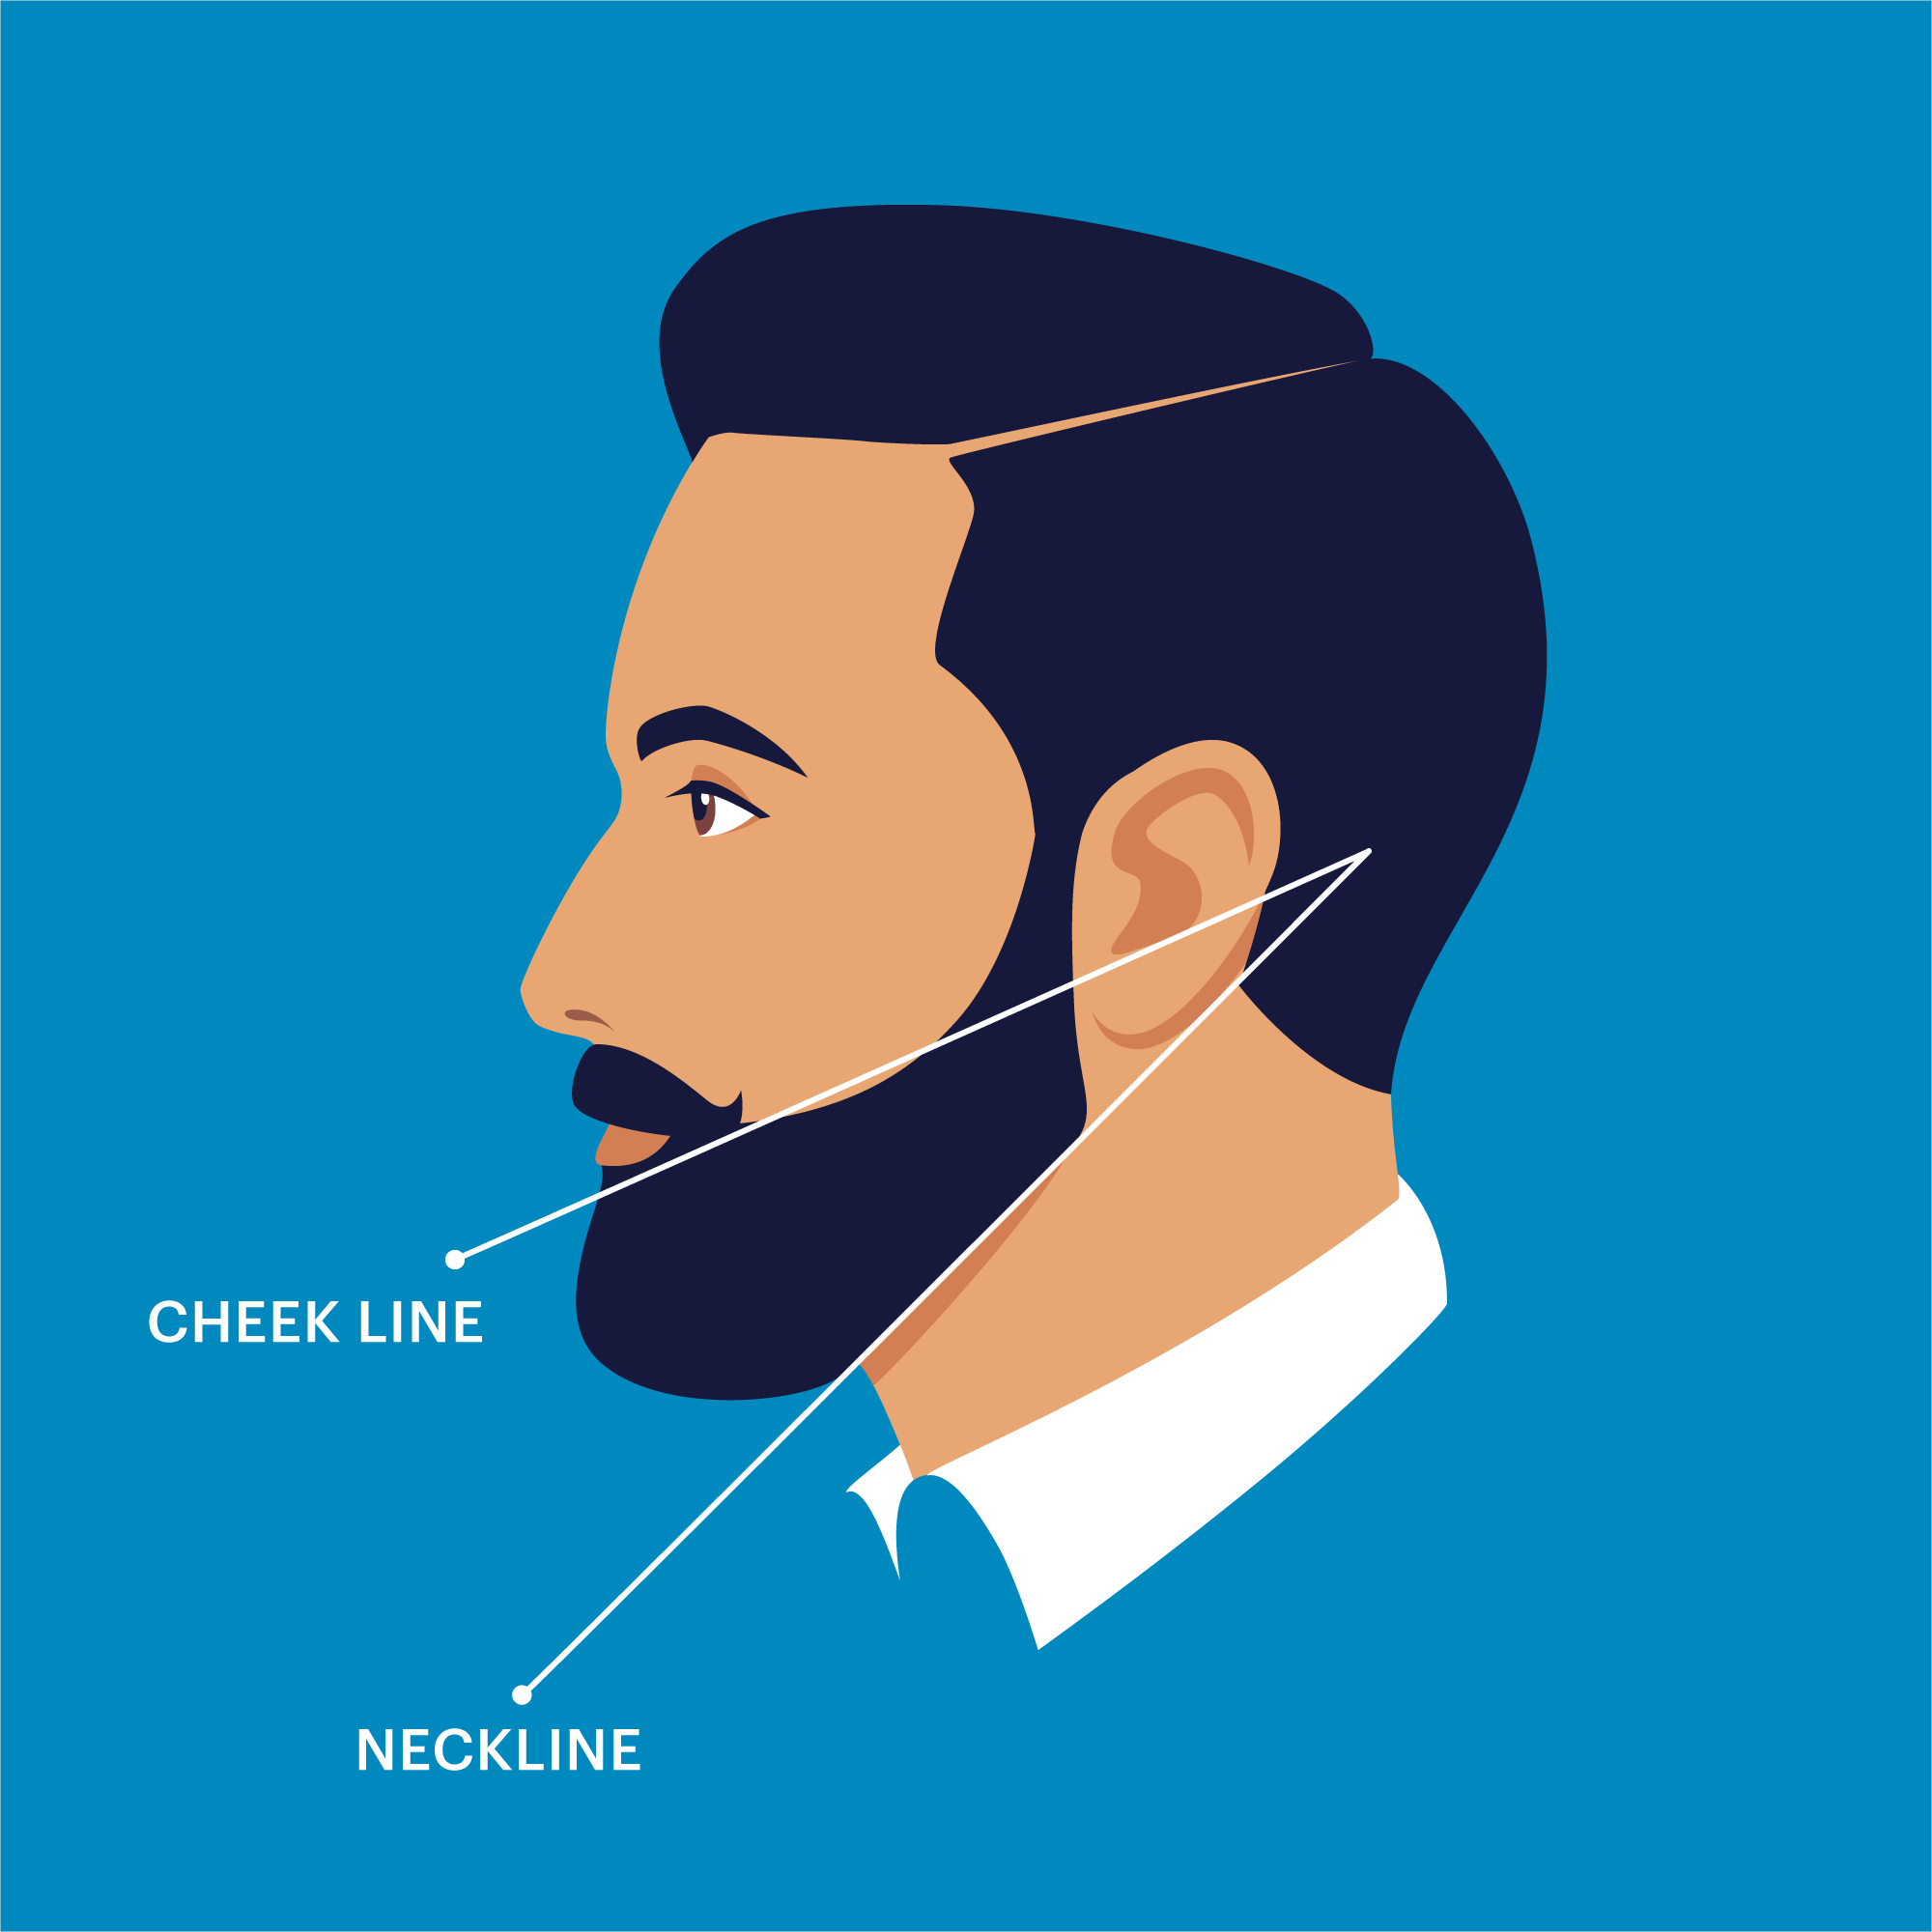 How to Trim a Beard Neckline 2022 - Beard and Cheek Line Tutorial